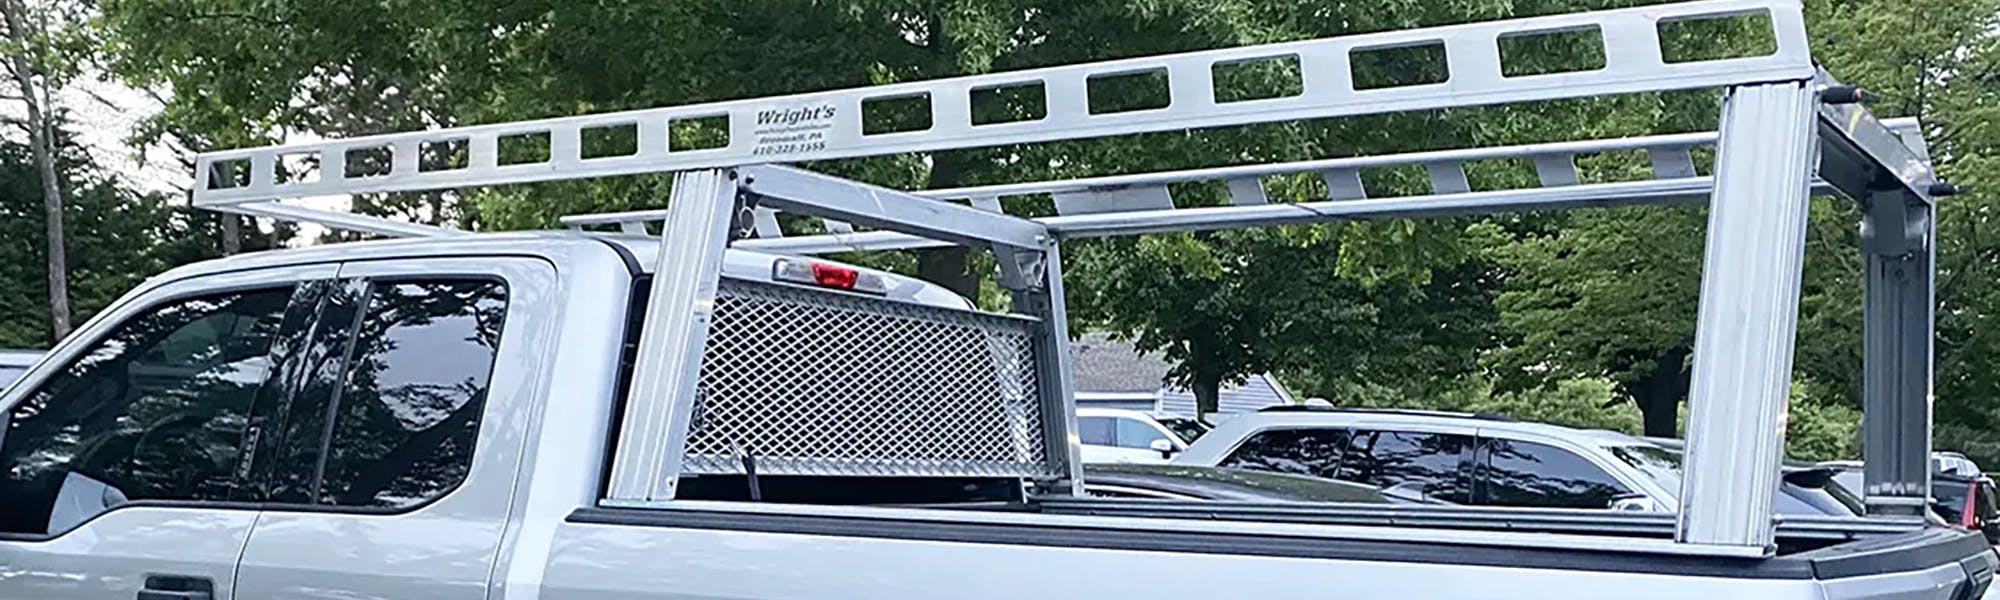 Truck Ladder Rack Drilling Options